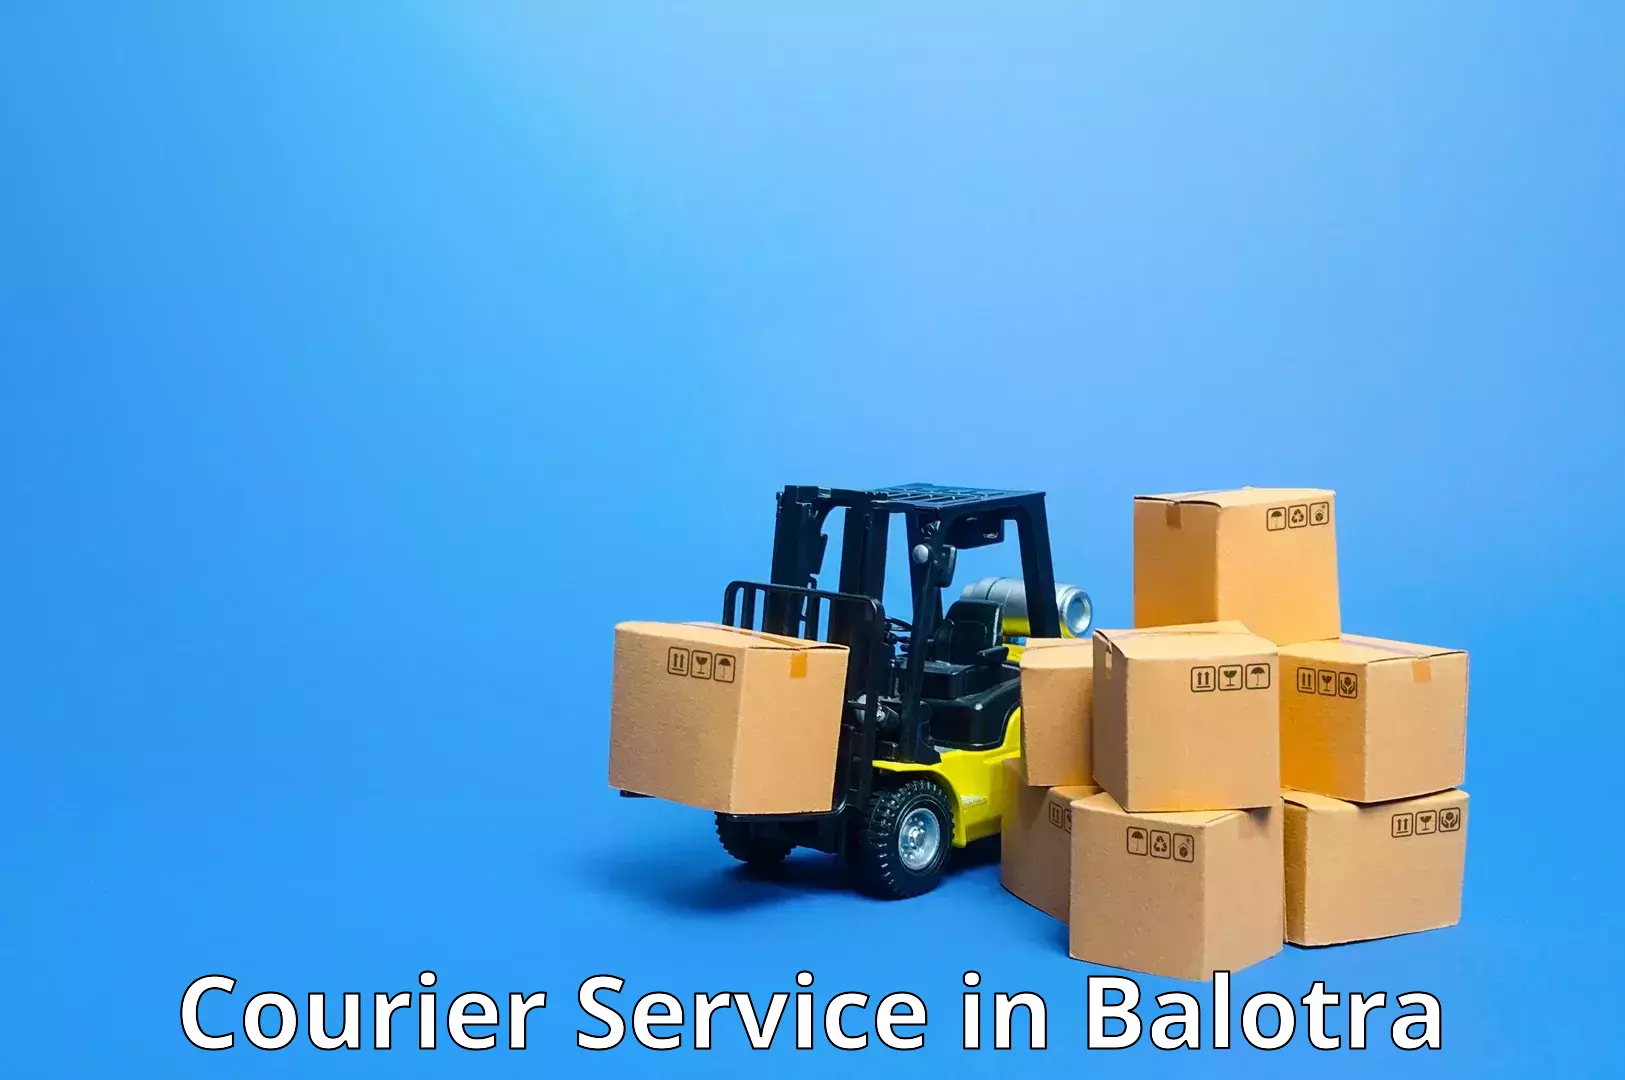 Efficient shipping platforms in Balotra